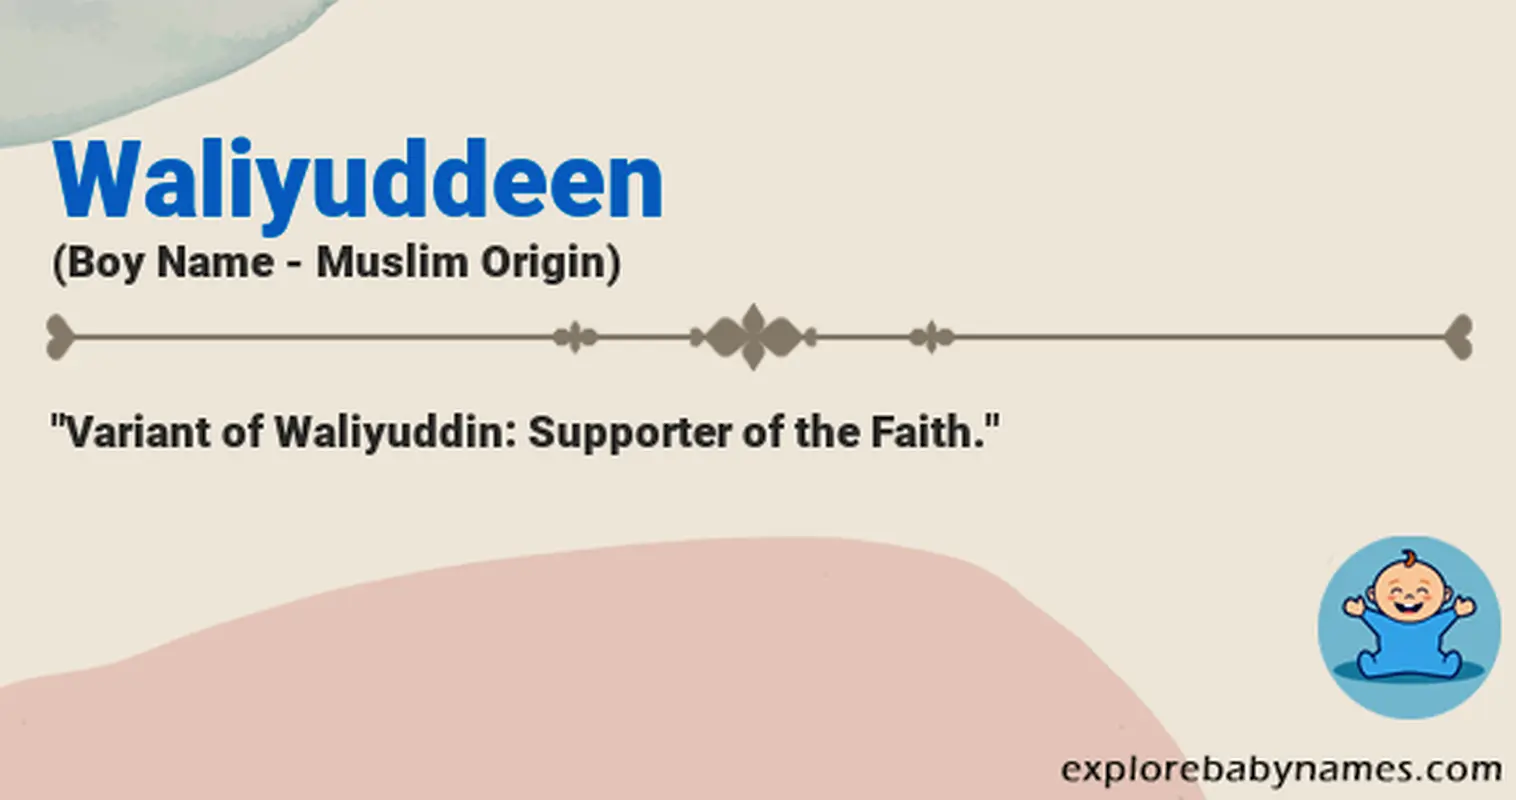 Meaning of Waliyuddeen